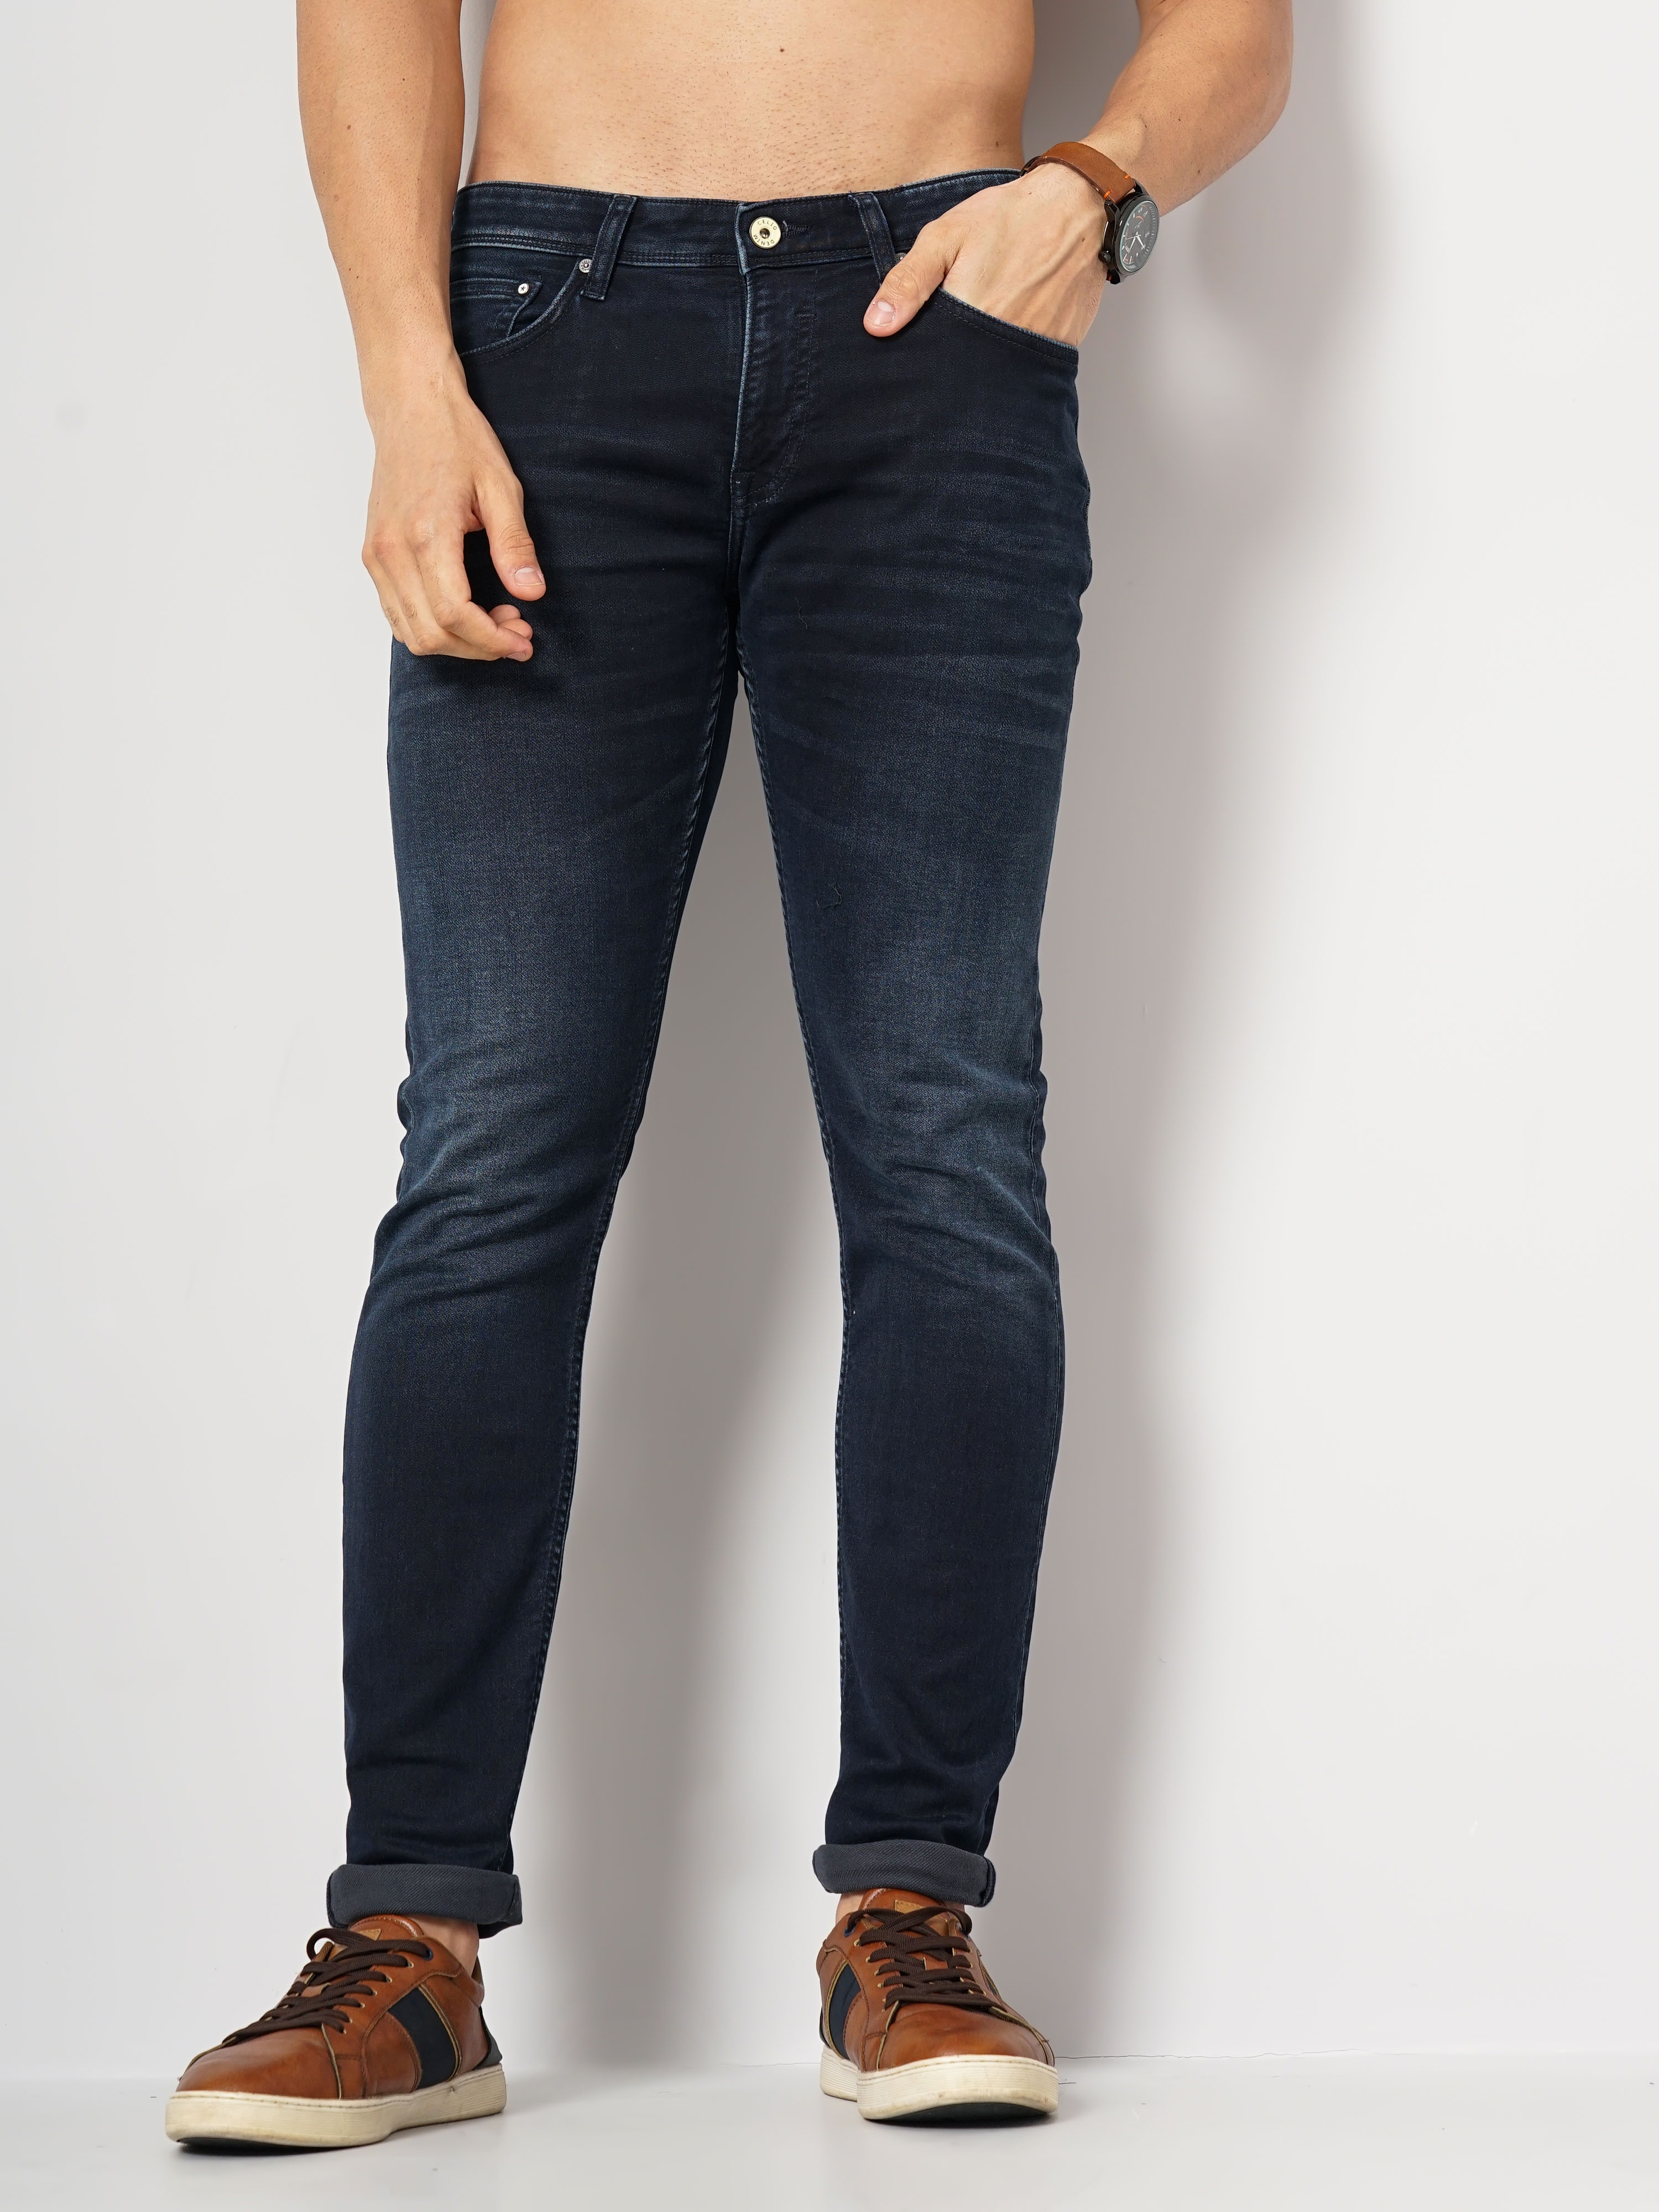 Men's Solid Knit Denim Jeans